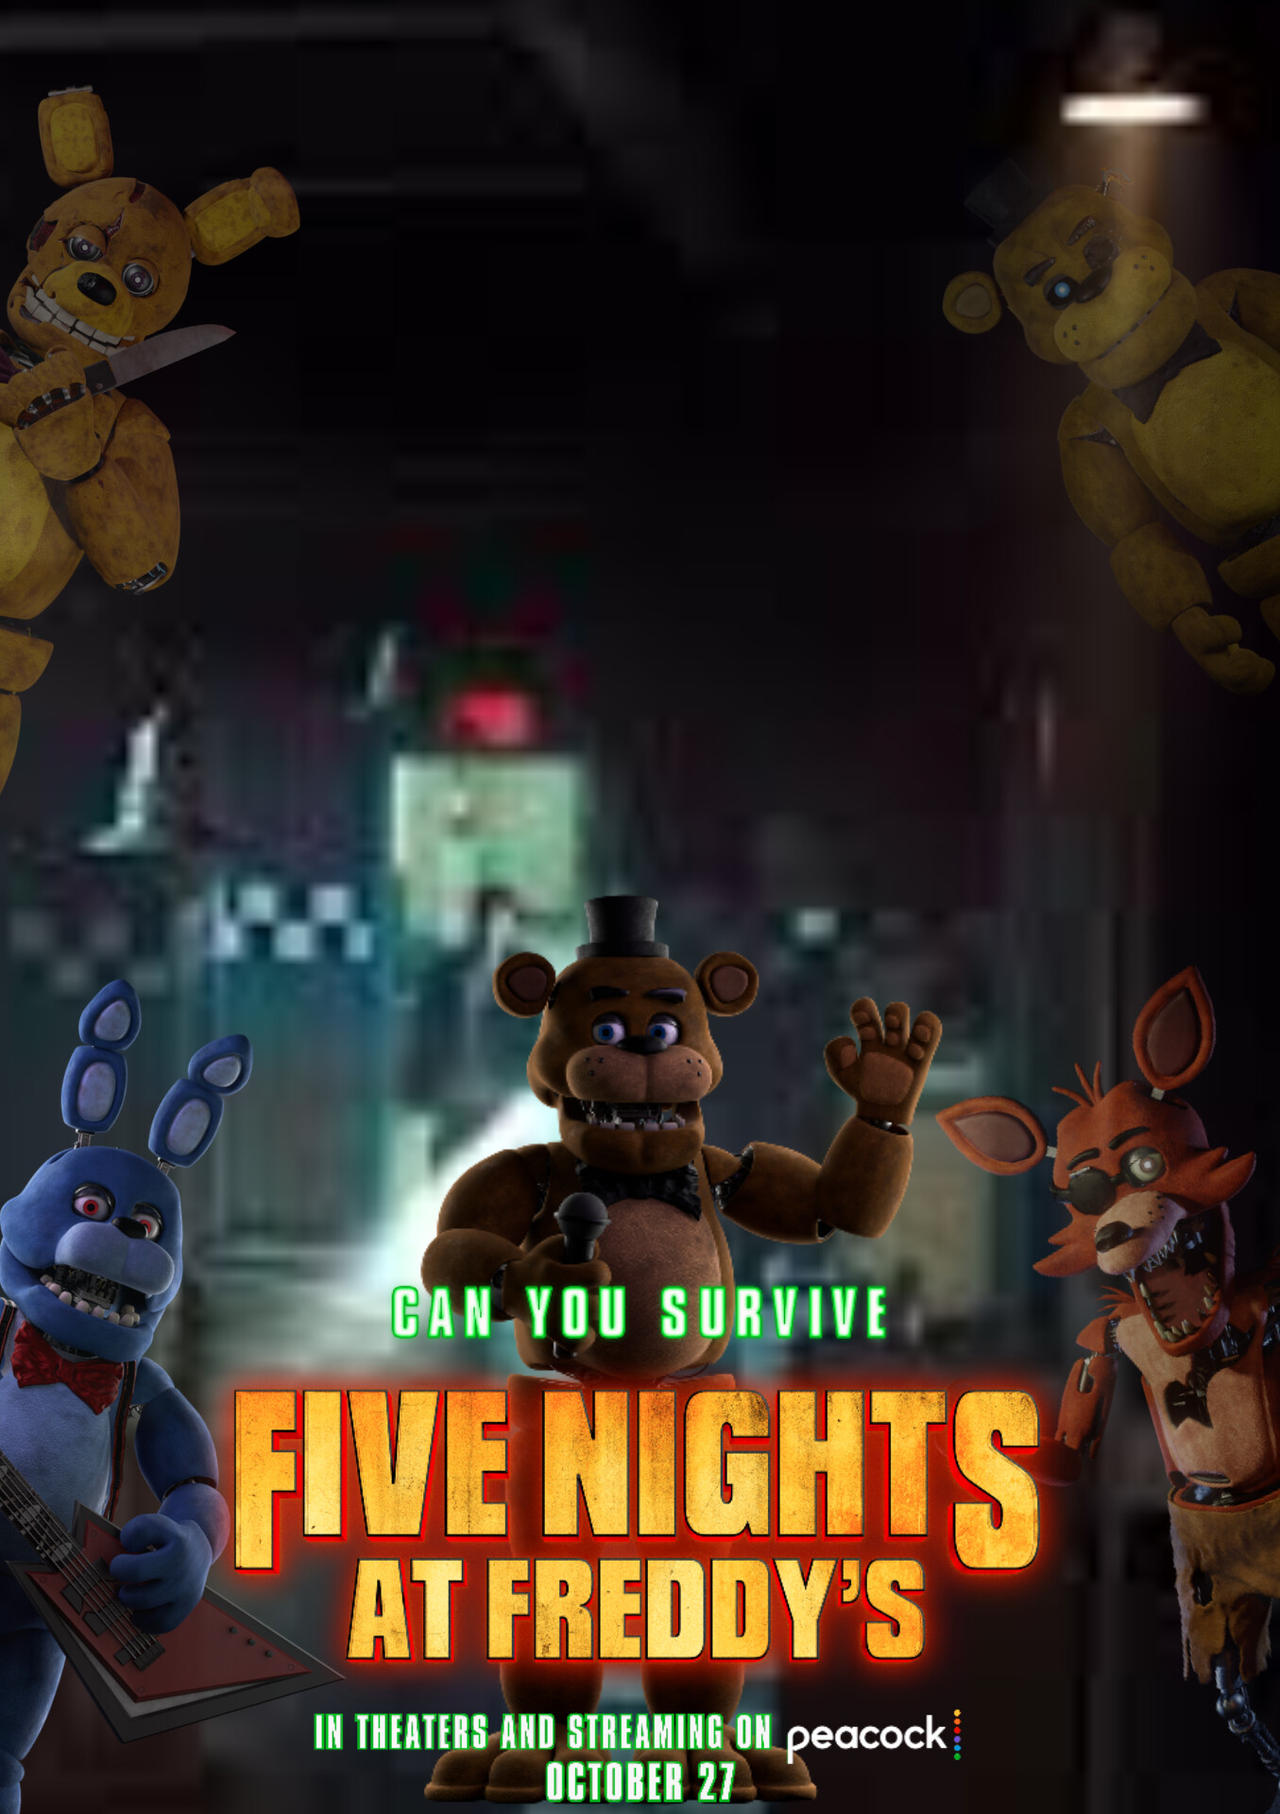 Fan Made Fnaf 2 movie poster by NWRJames5 on DeviantArt